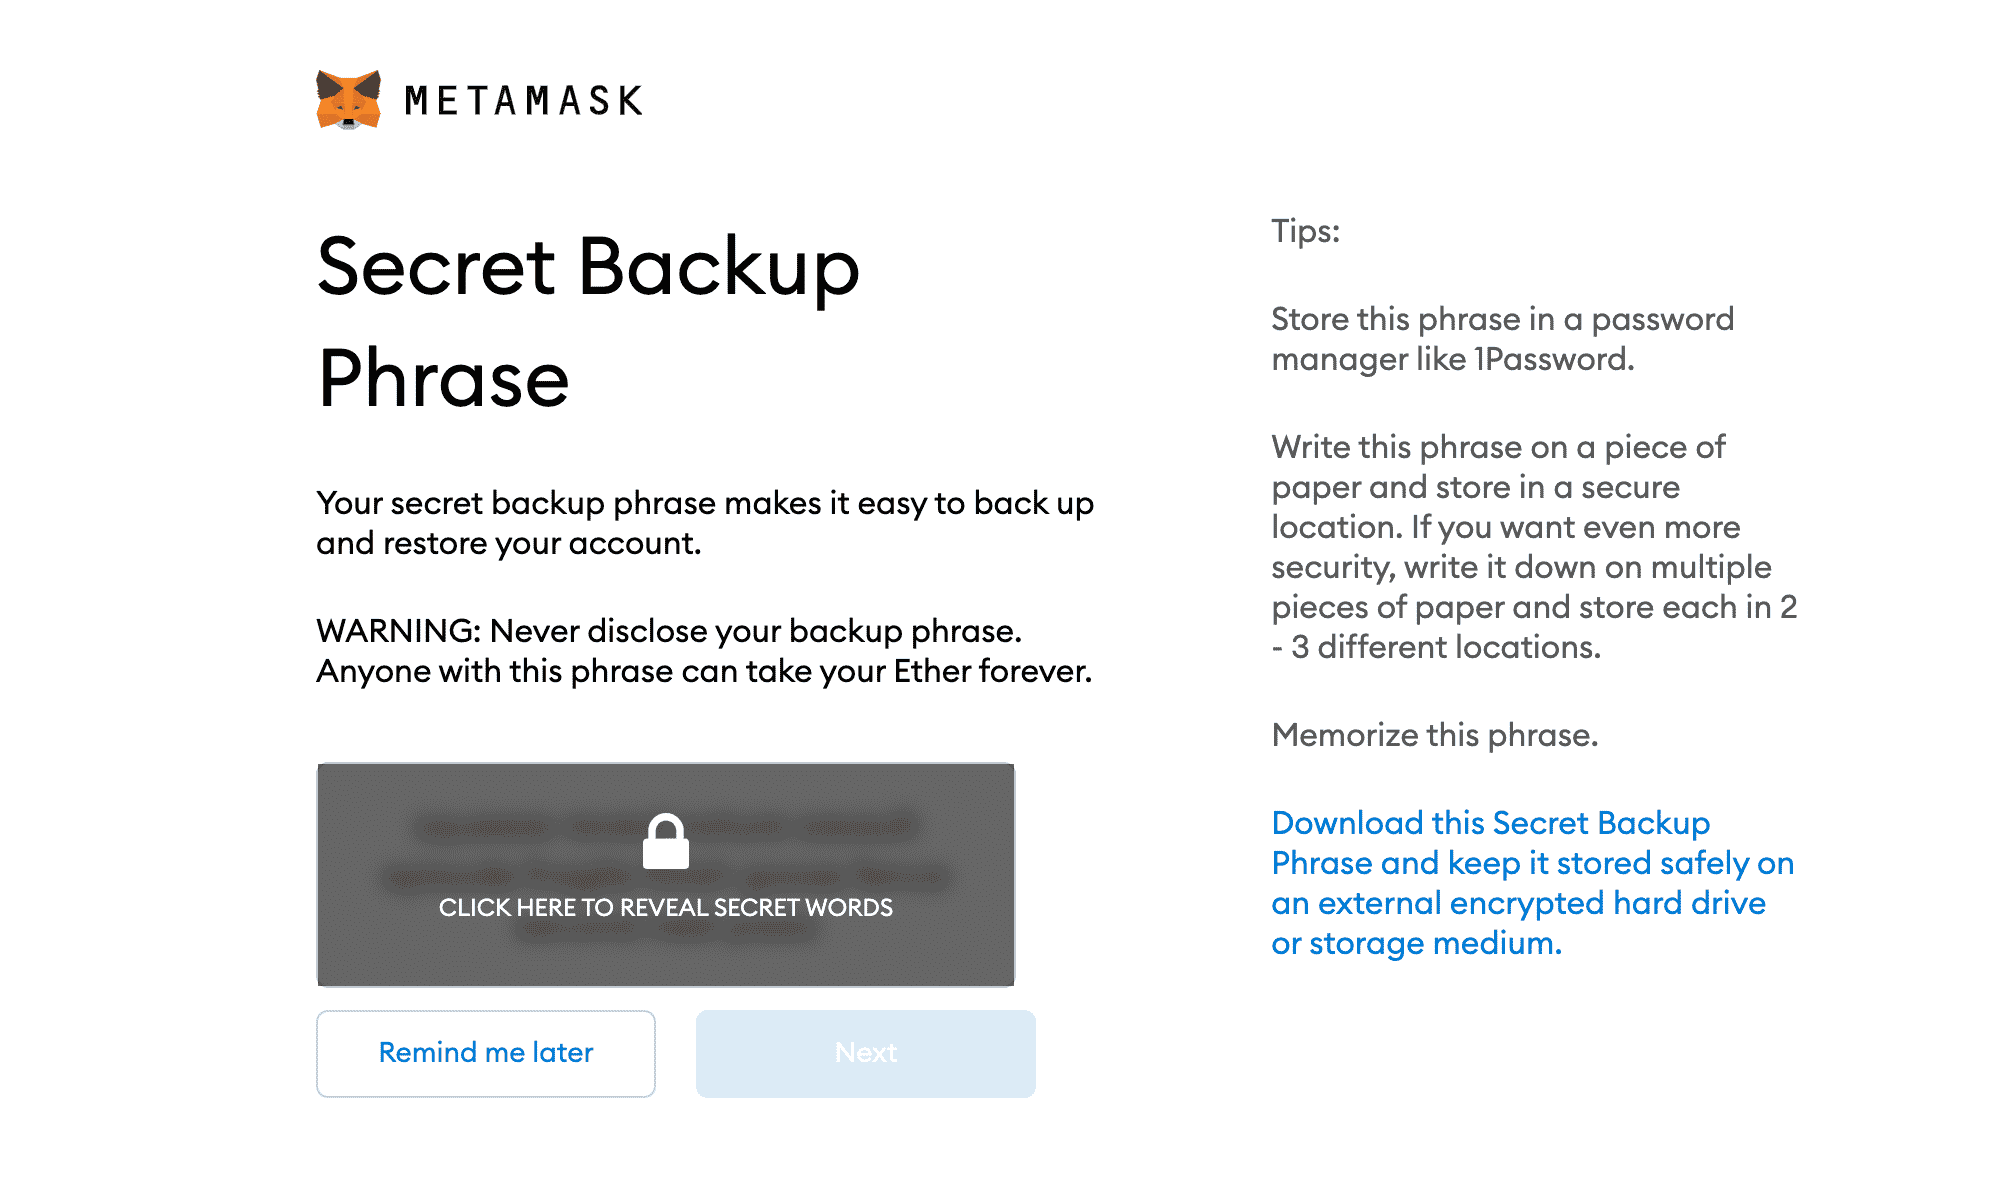 The Secret Backup Phrase Screen